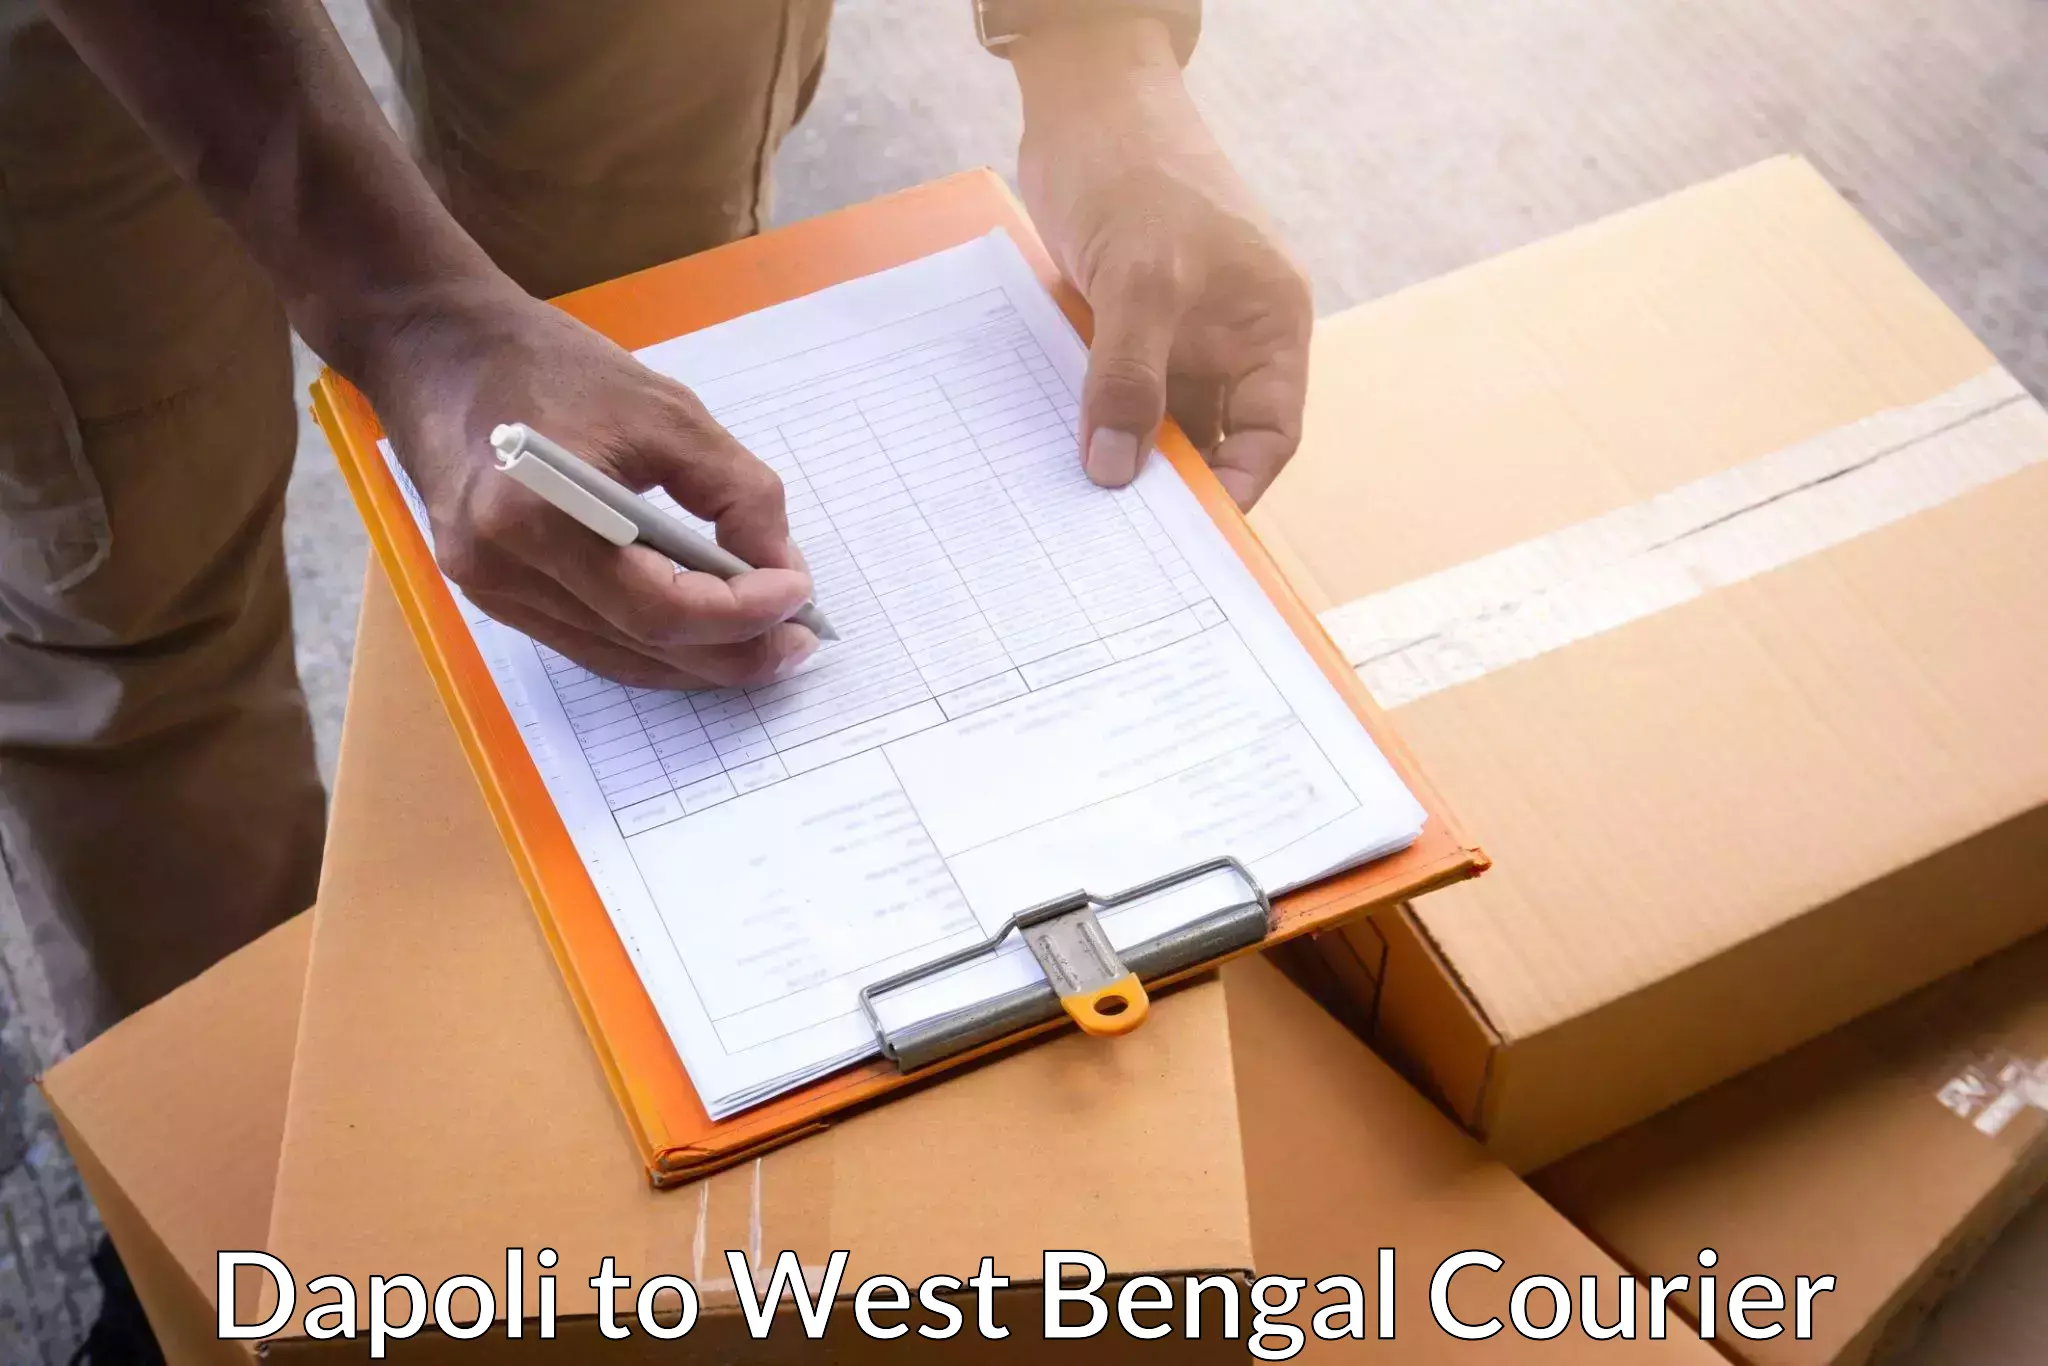 Automated parcel services Dapoli to Kolkata Port